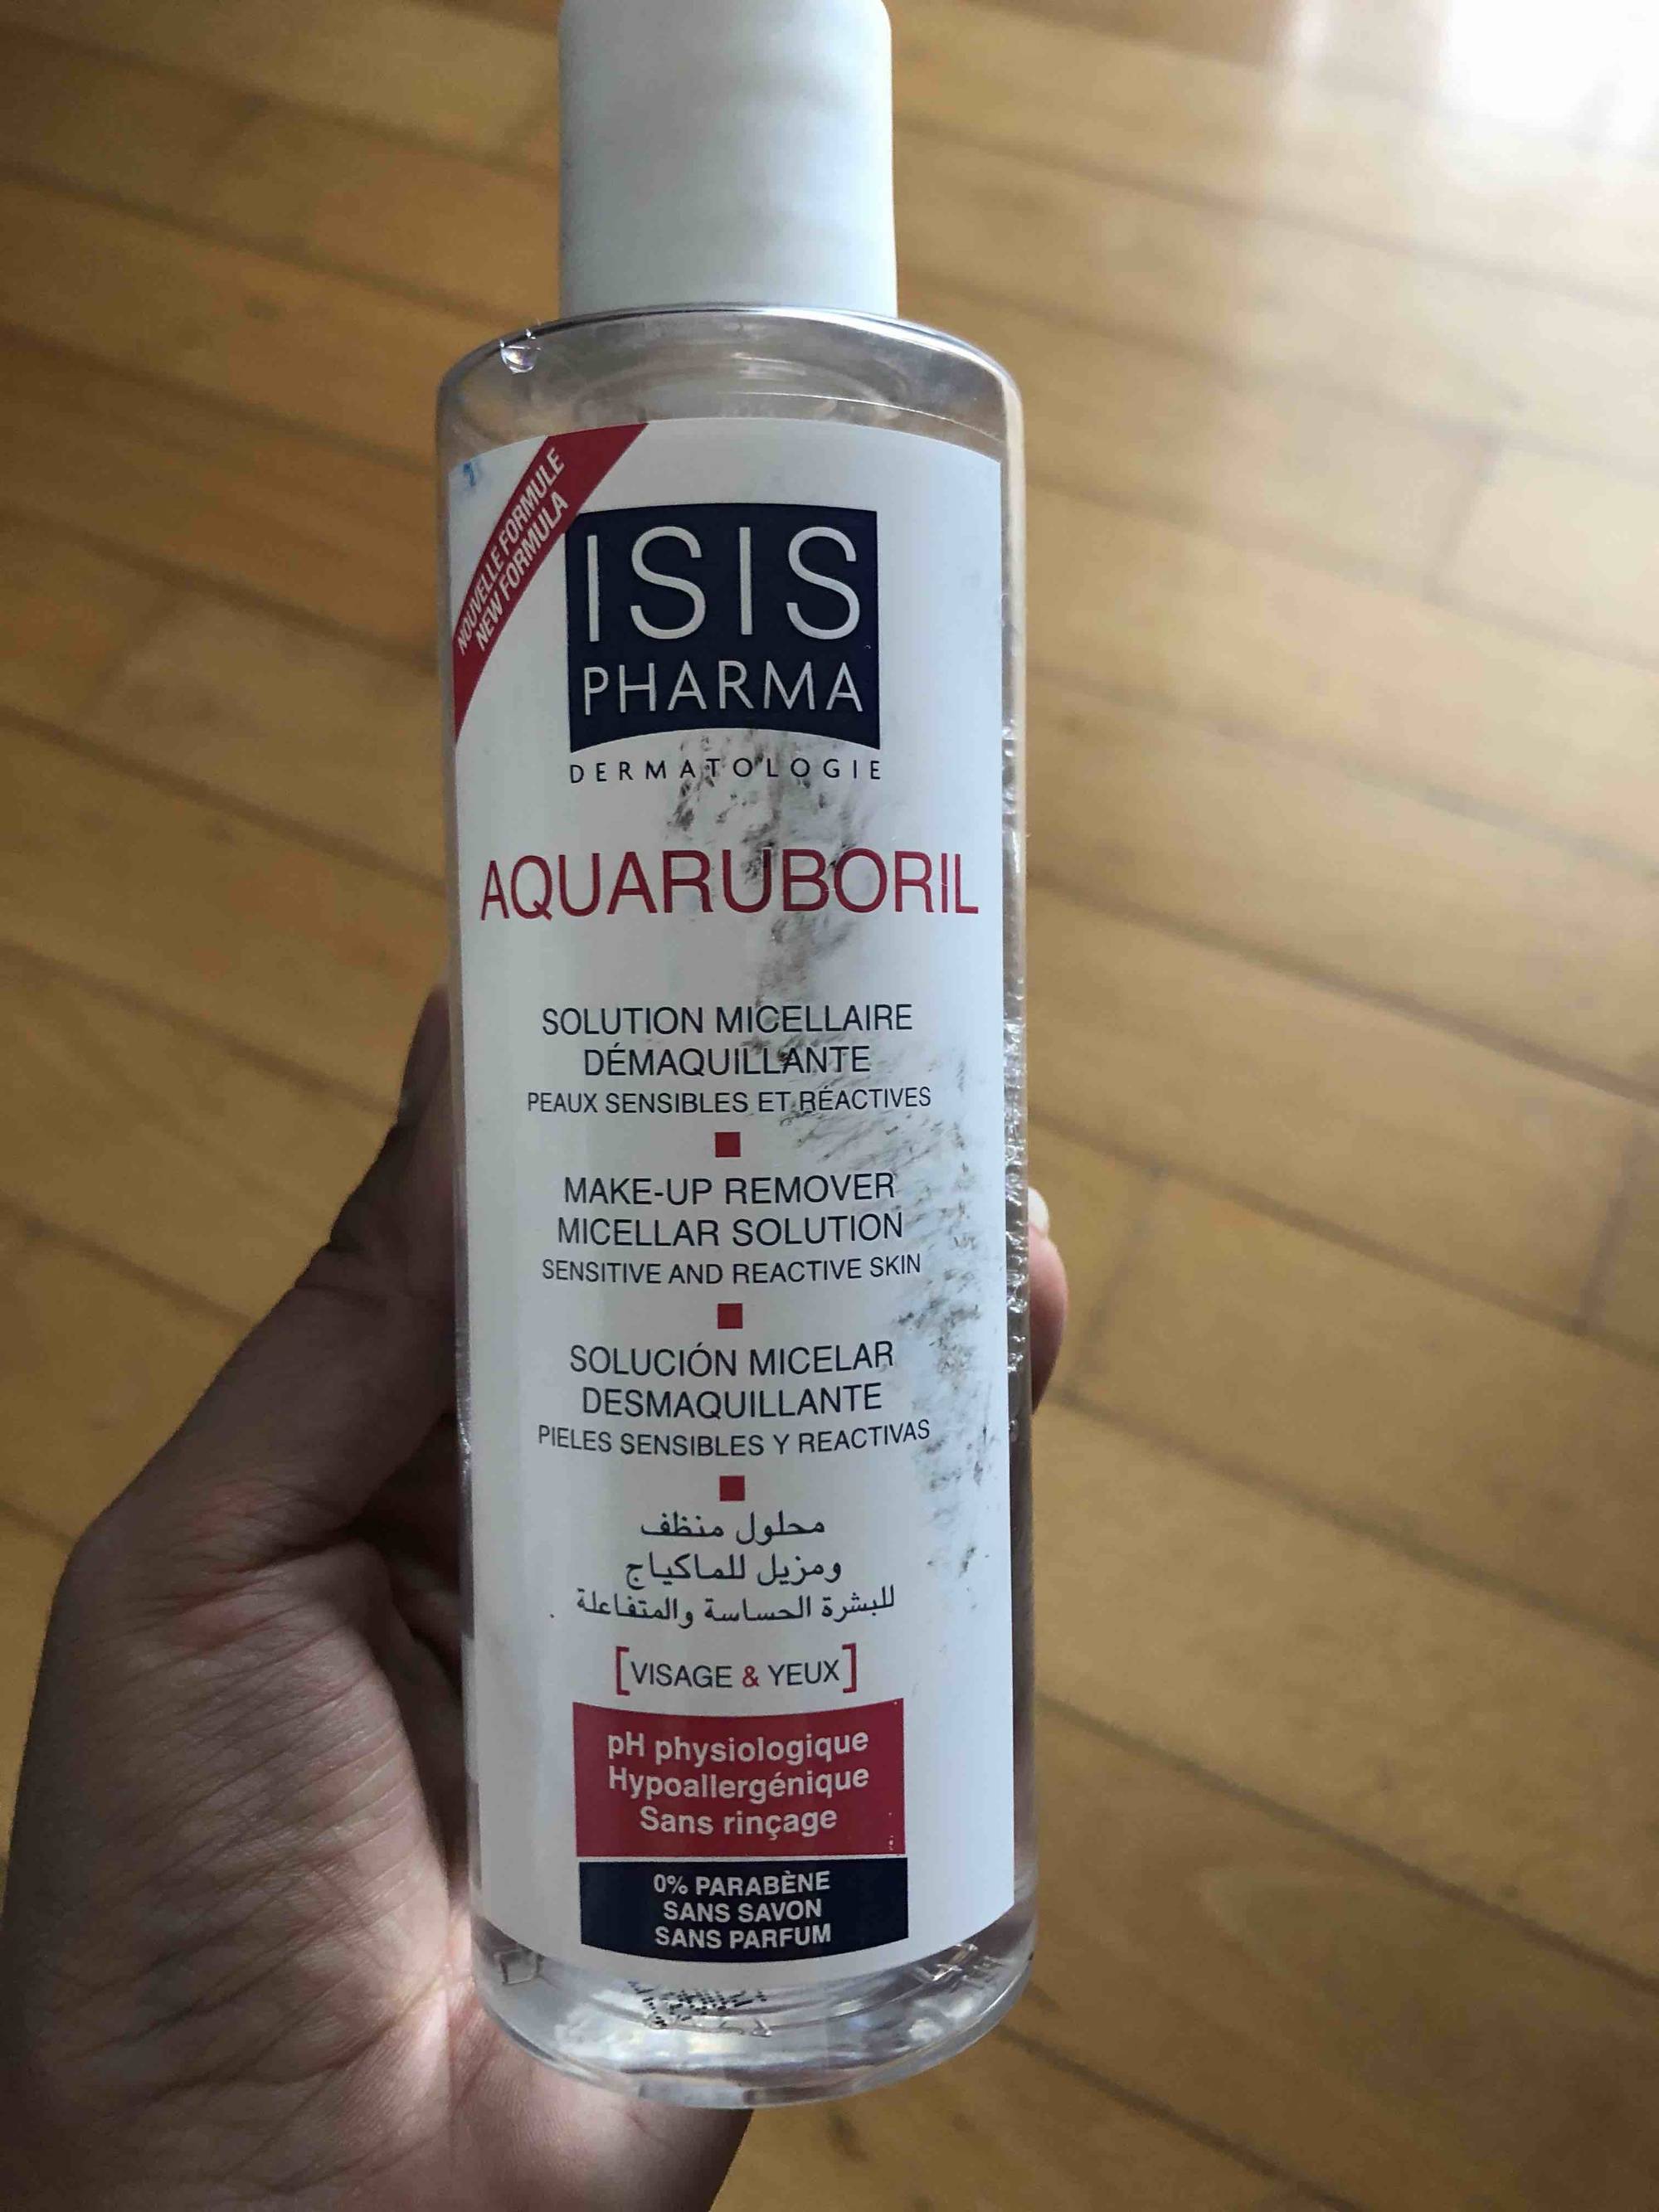 ISIS PHARMA - Aquaruboril - Solution micellaire démaquillante